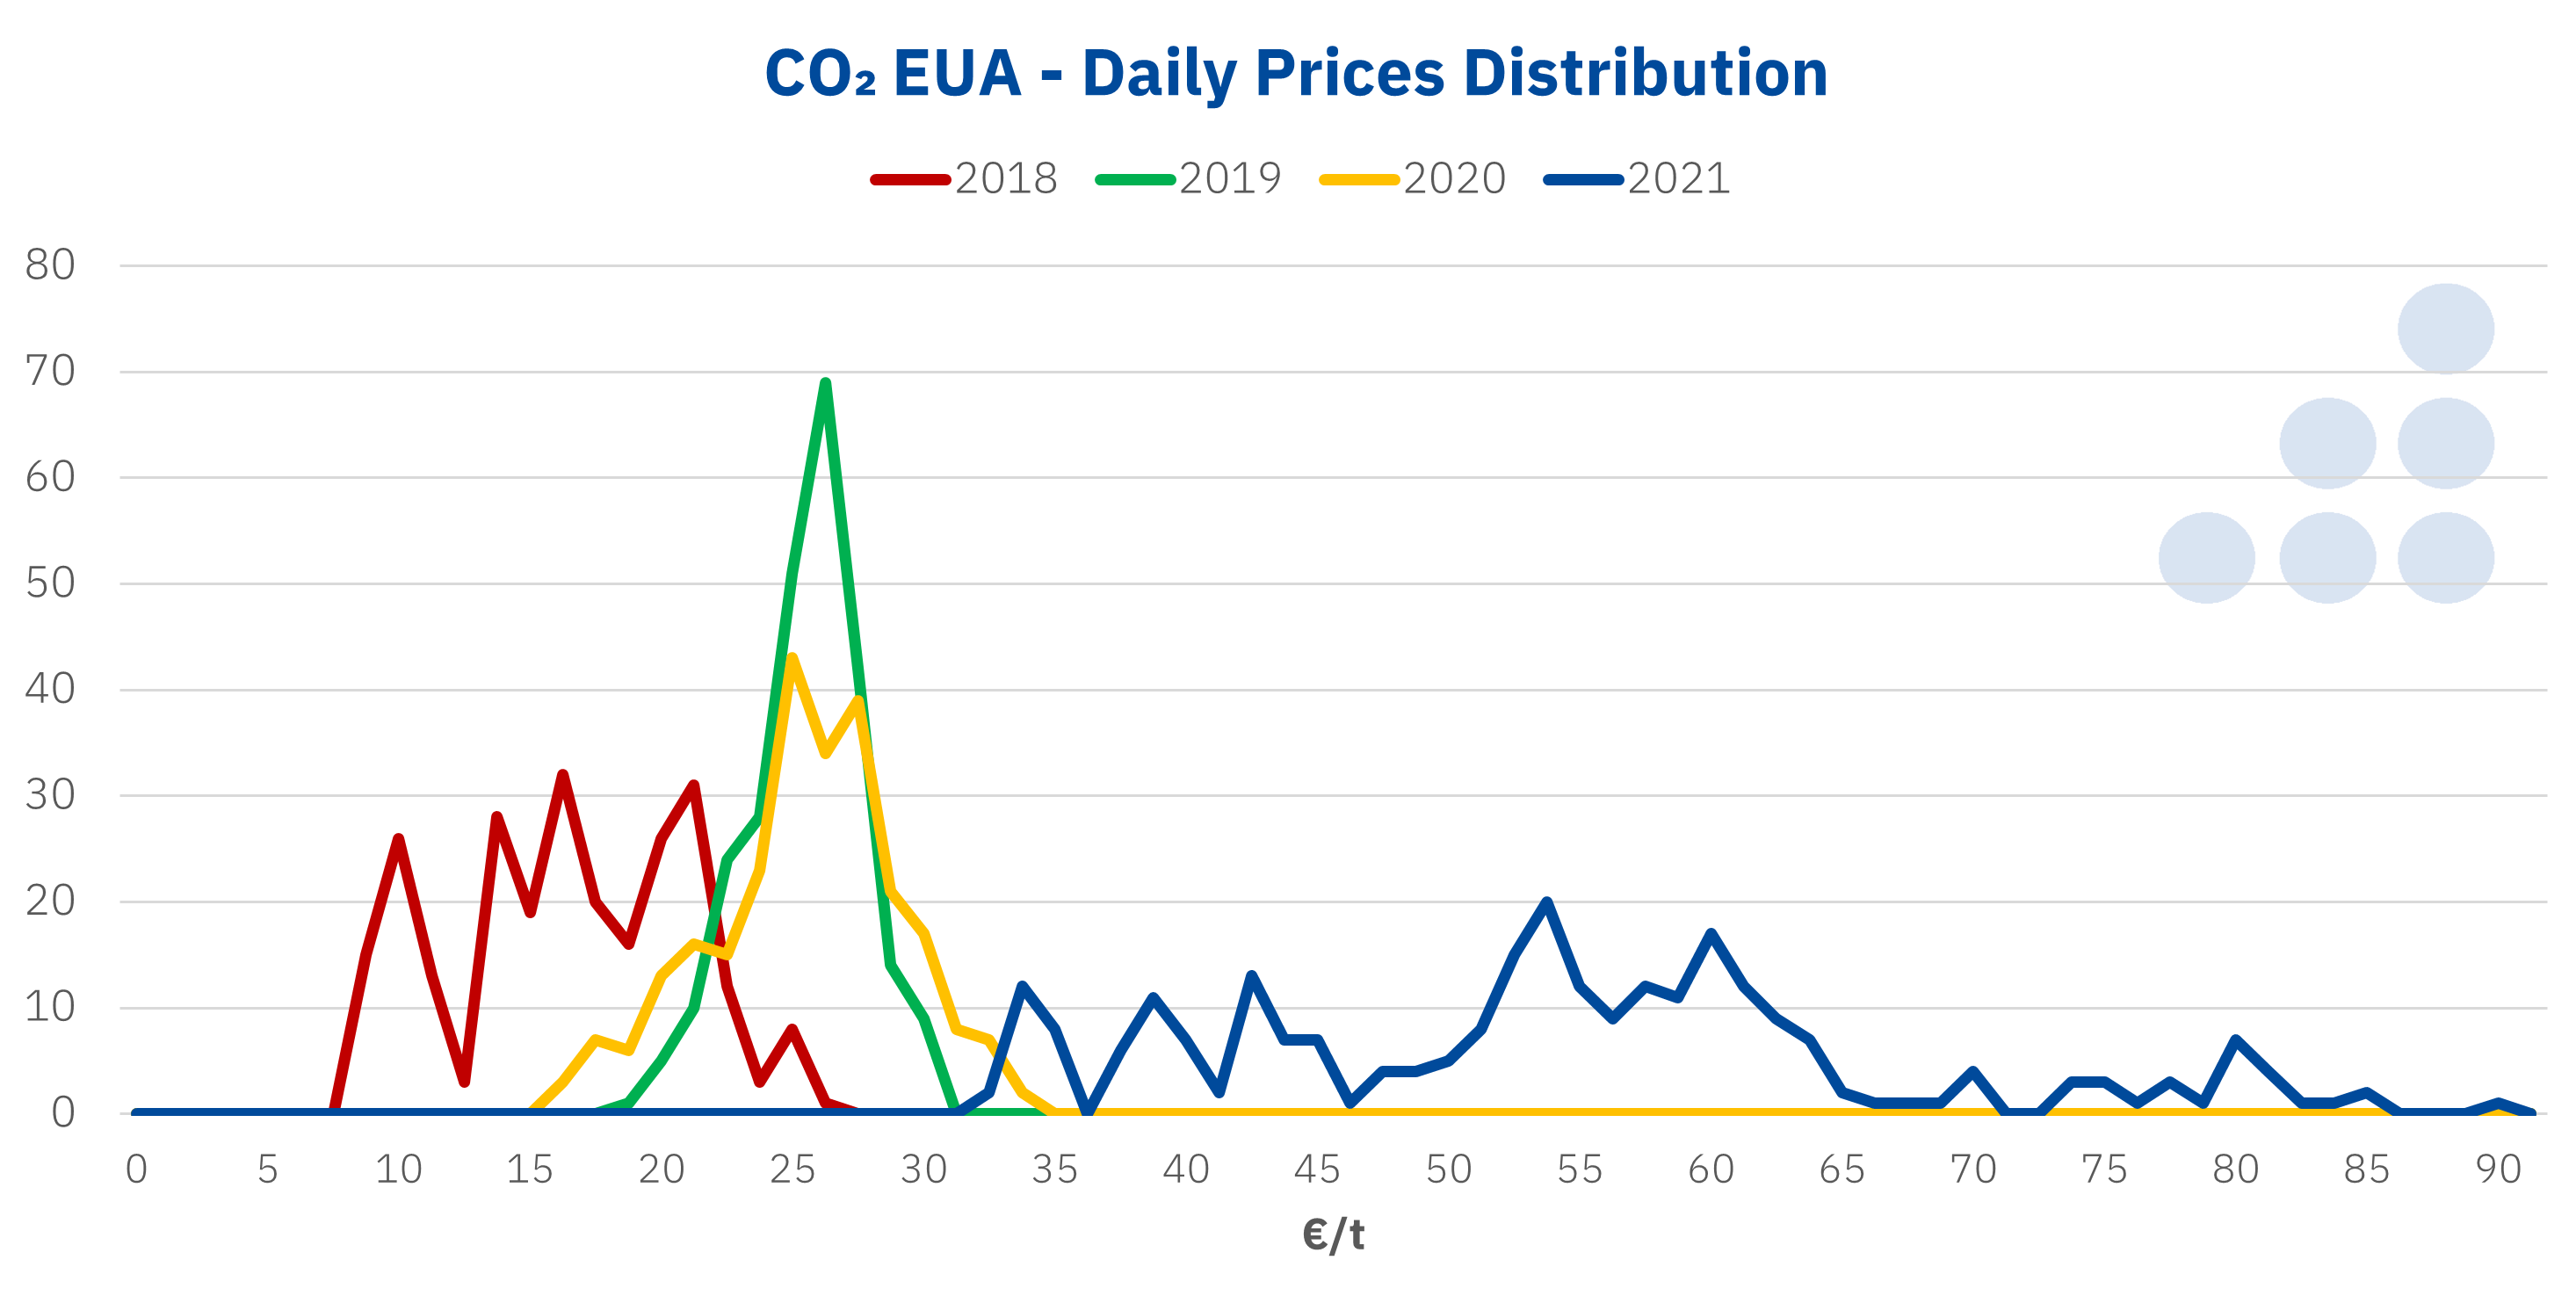 AleaSoft - CO2 prices